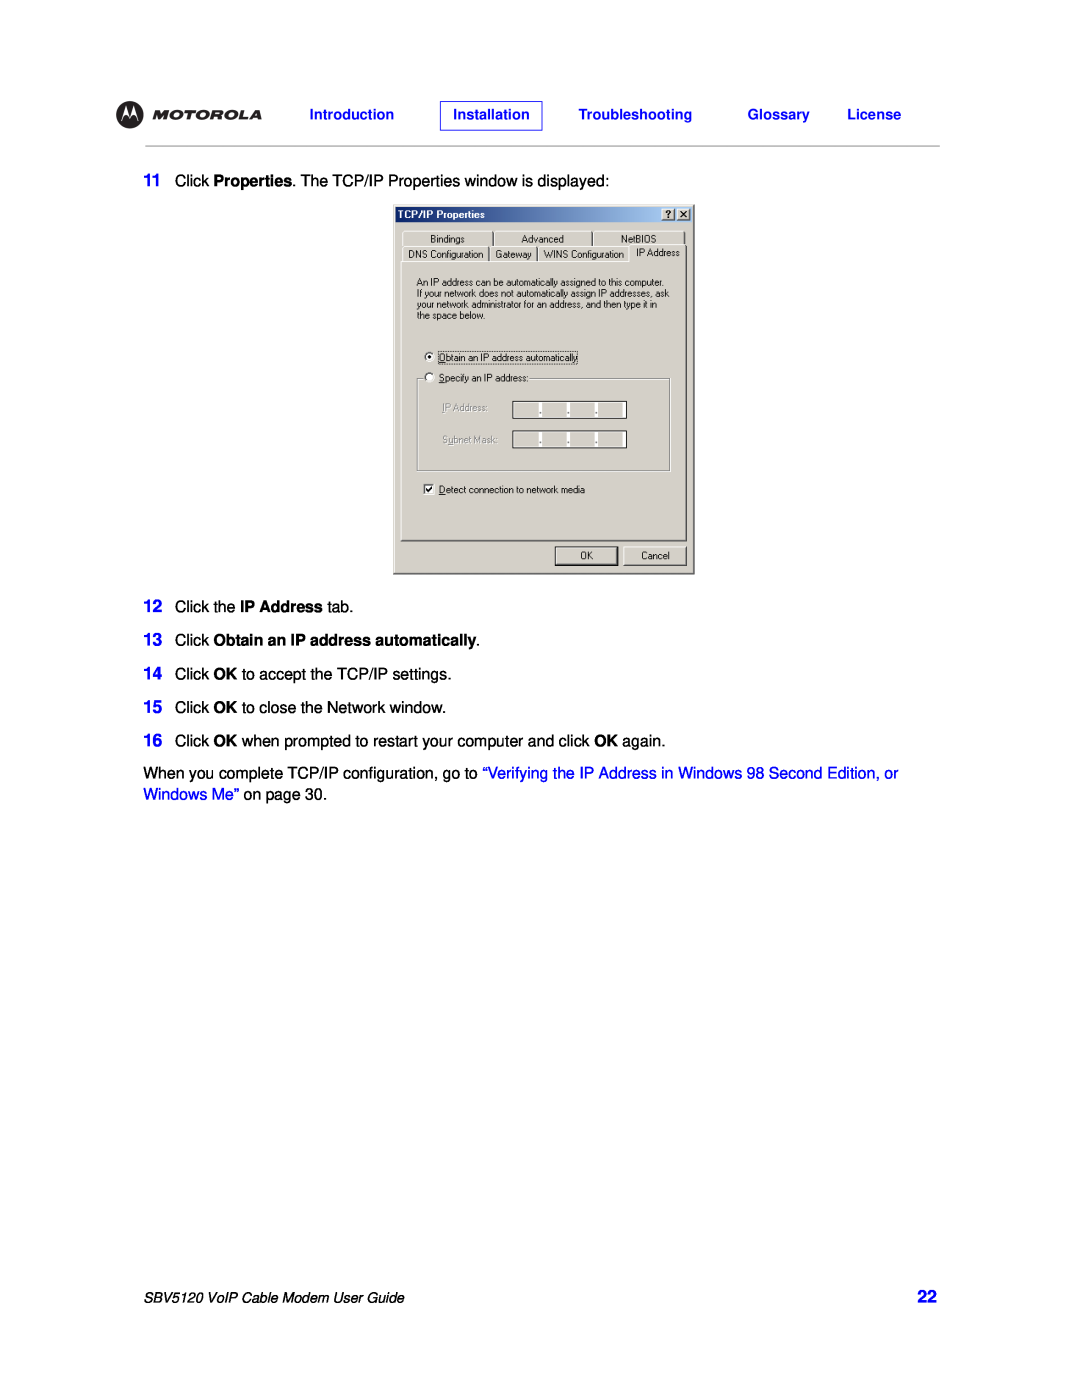 Motorola SBV5120 manual Click Obtain an IP address automatically 